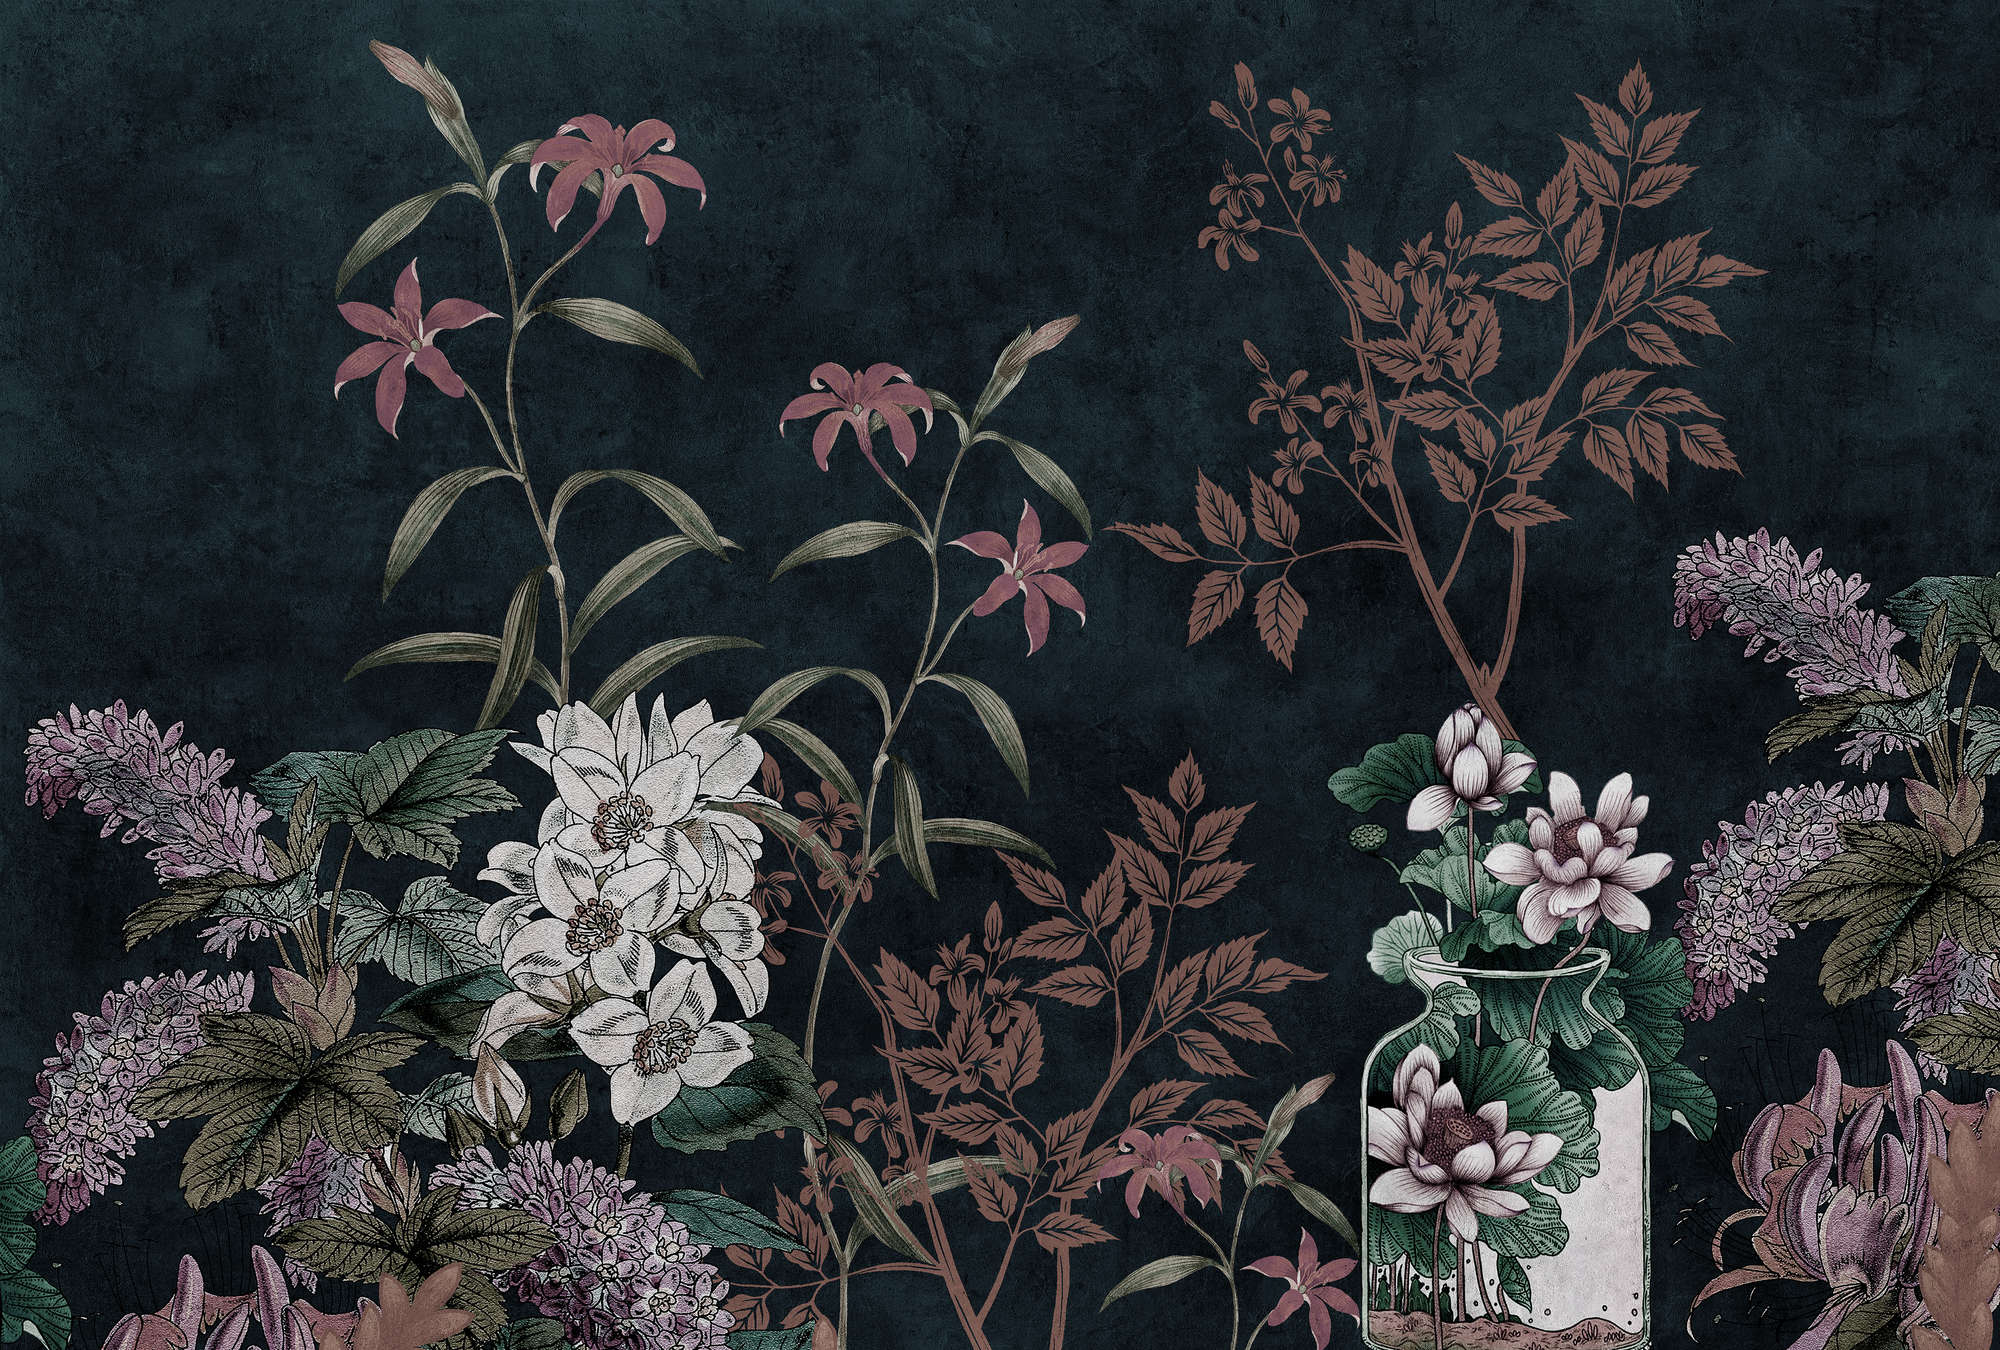             Dark Room 2 - Papier peint noir Botanical Muster Rosa
        